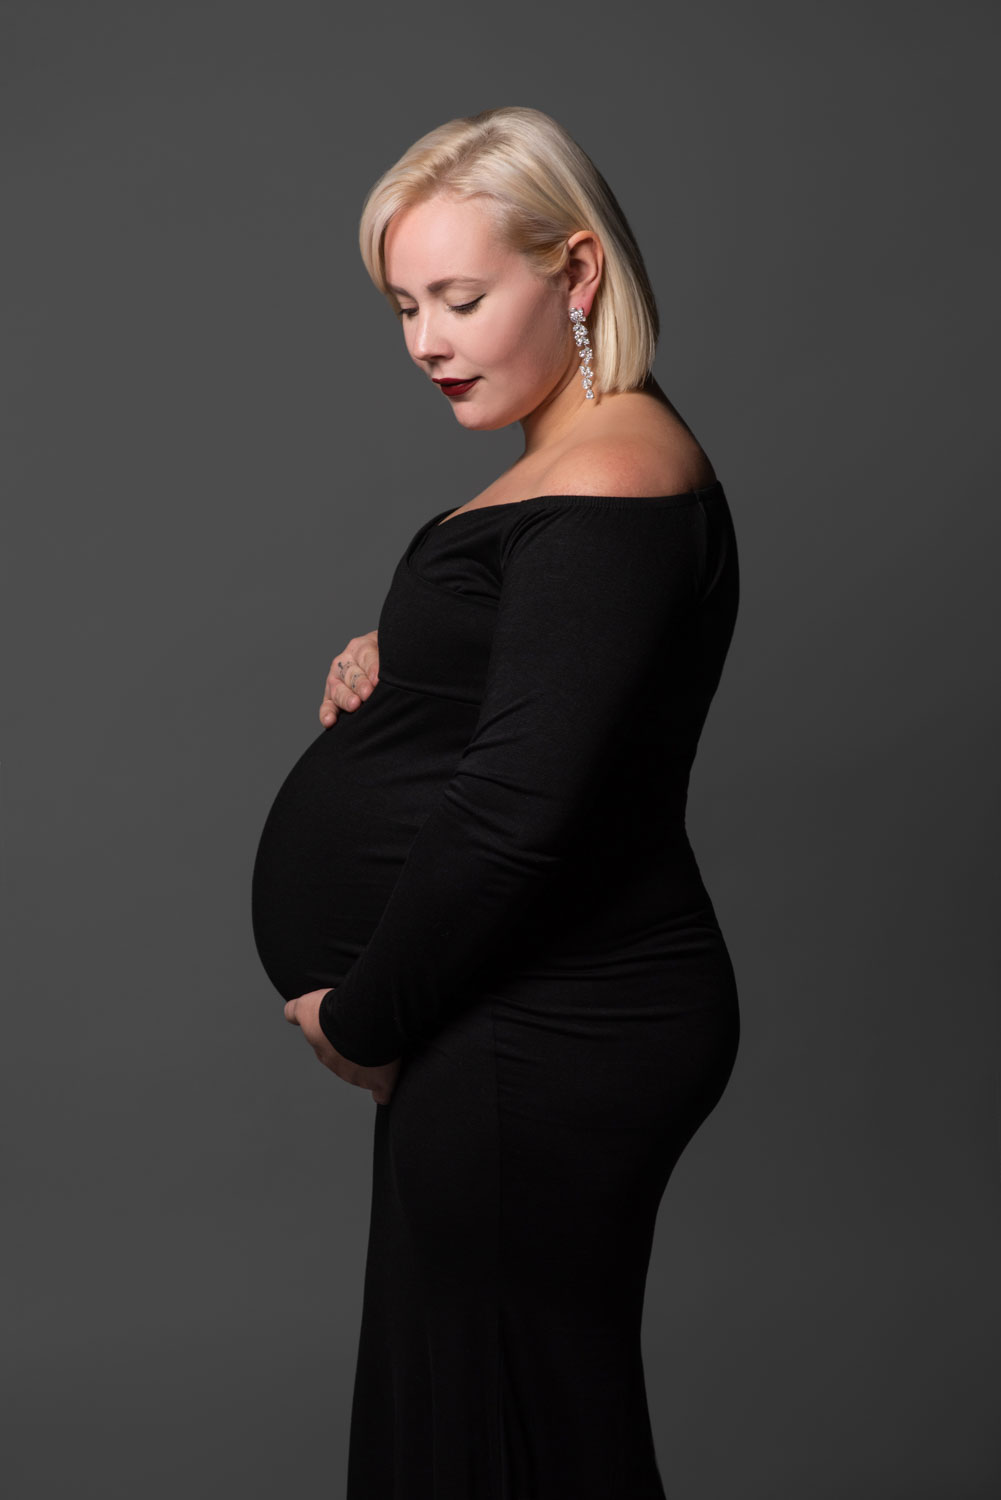 Posh maternity photography